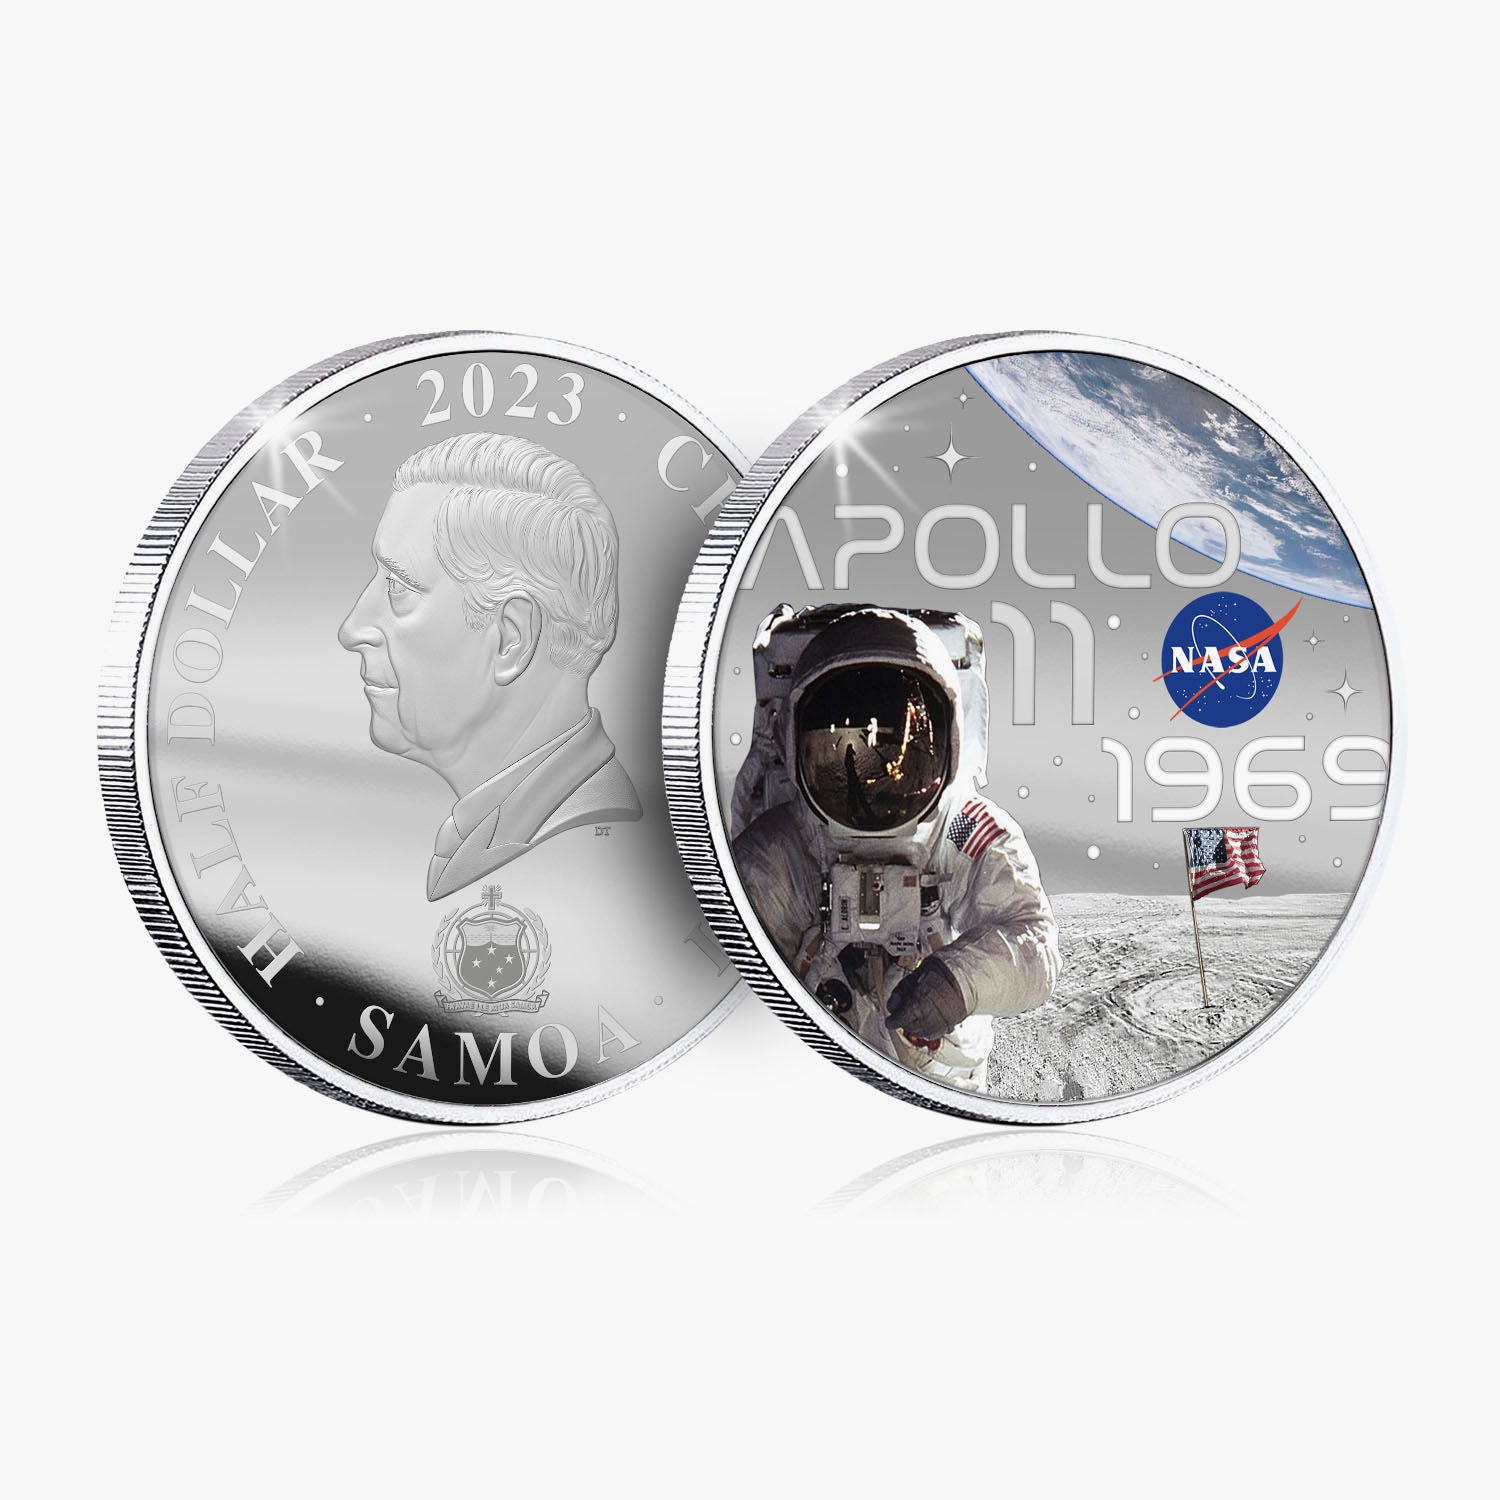 NASA 2023 アポロ 11 号 50mm 銀メッキ コイン